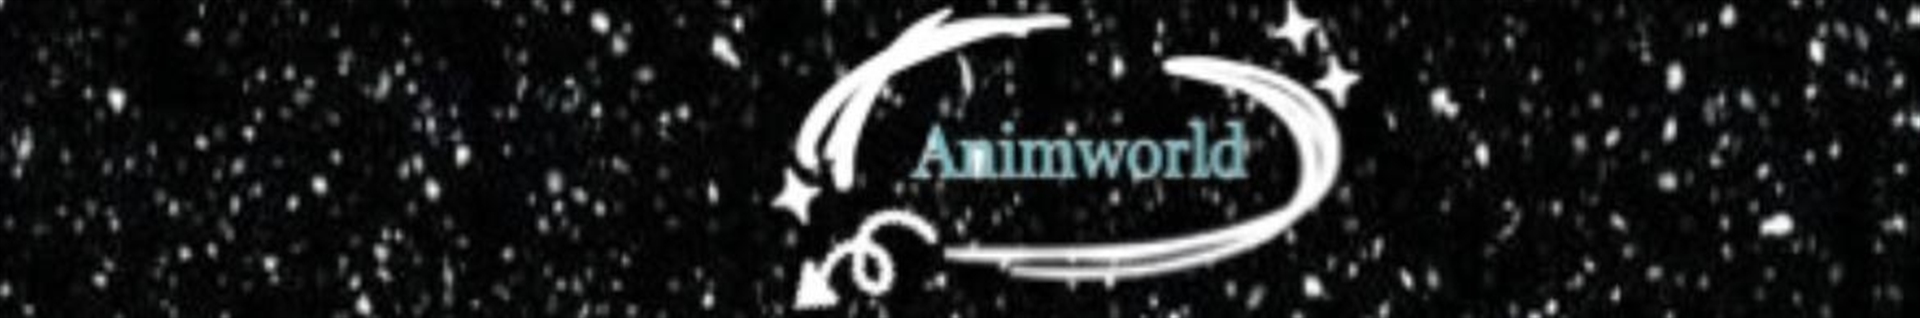 Animworld